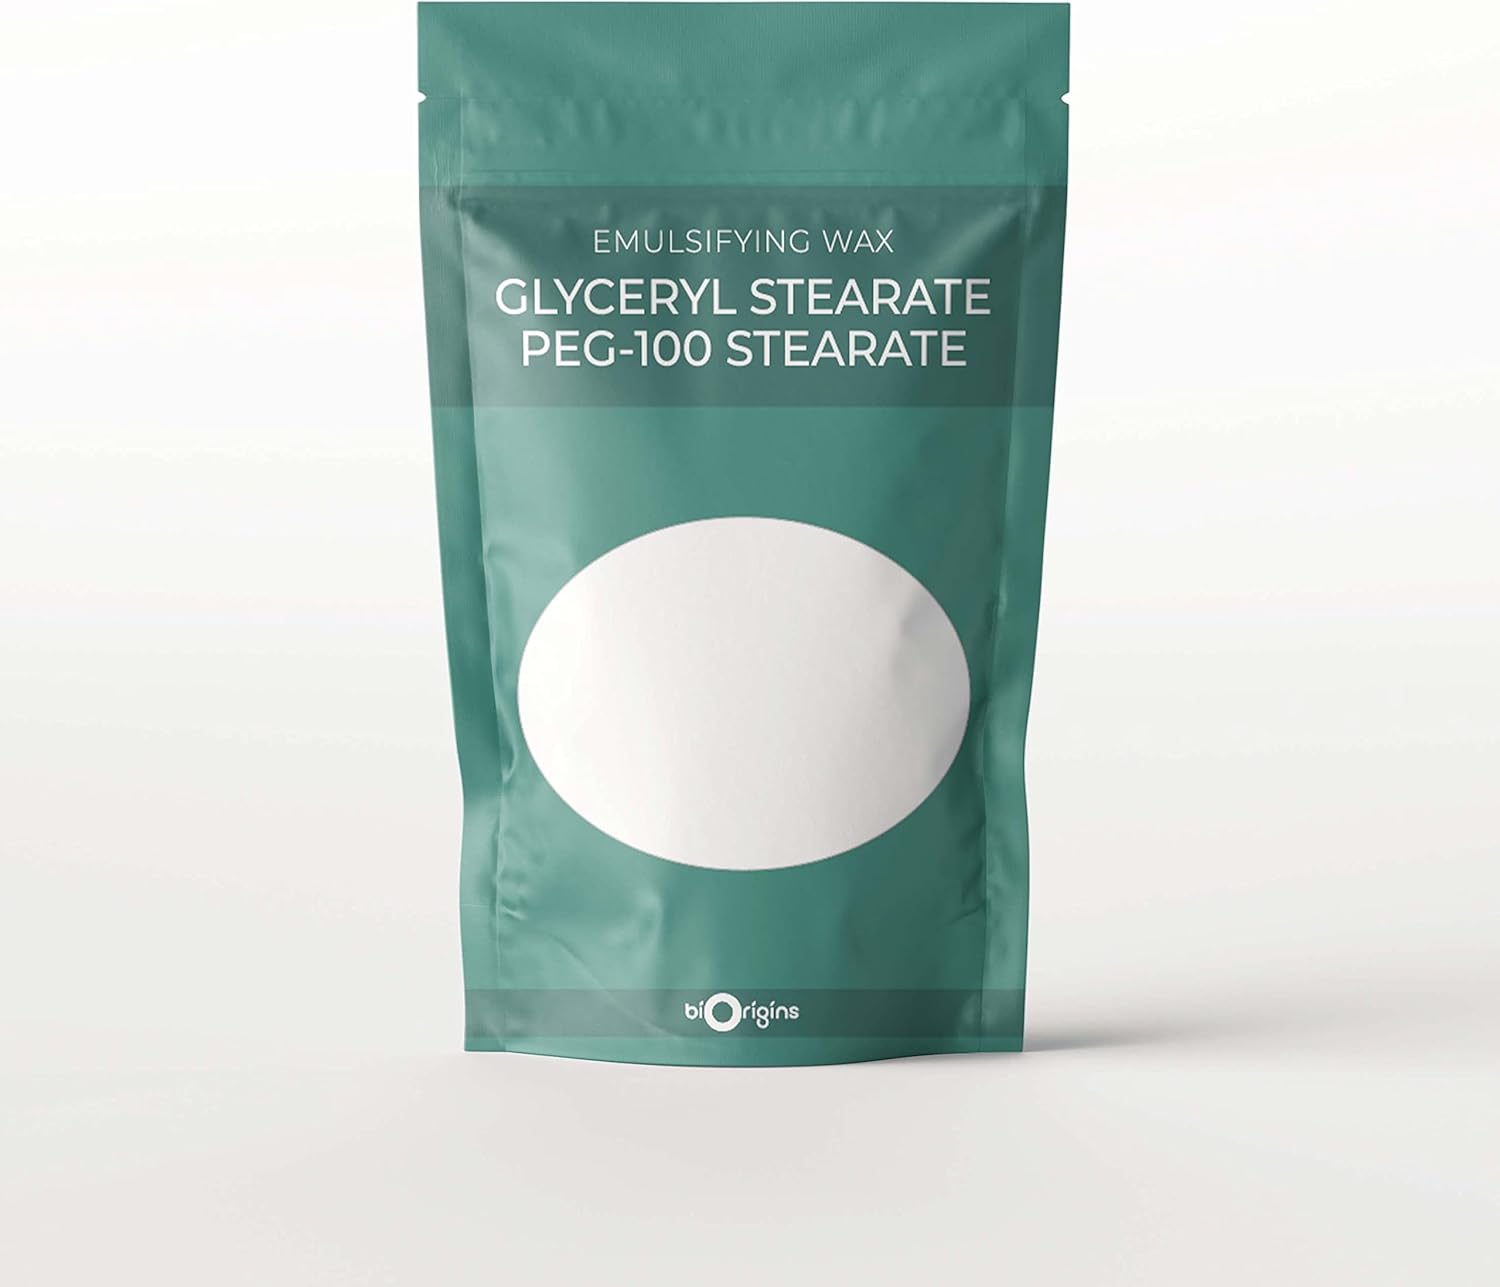 Mystic Moments Glyceryl Stearate & PEG-100 Stearate Emulsifying Wax 100g | 100% Natural Vegan GMO Free